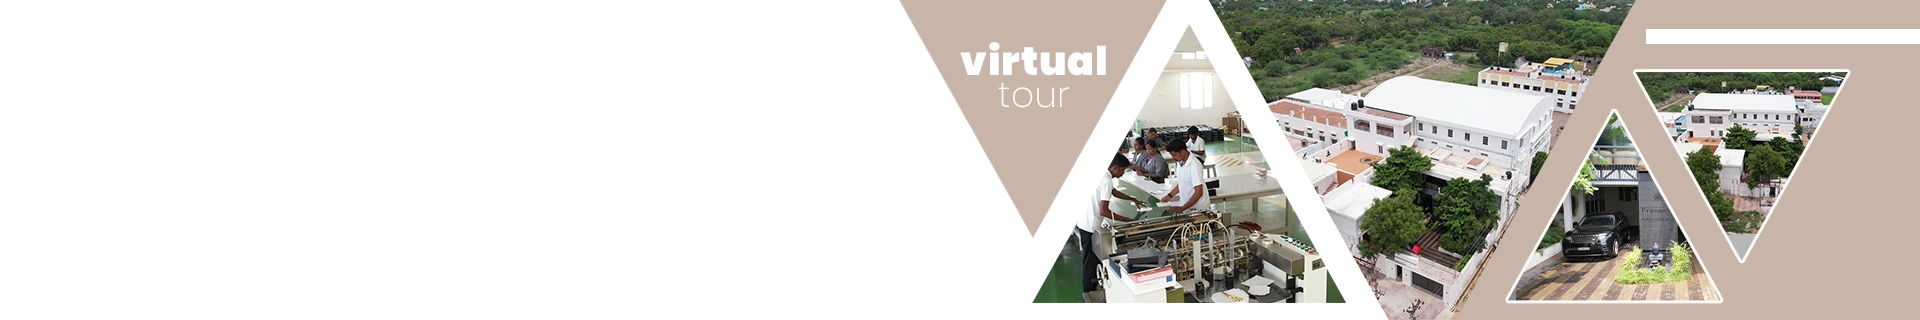 Virtual Company Tour Banner